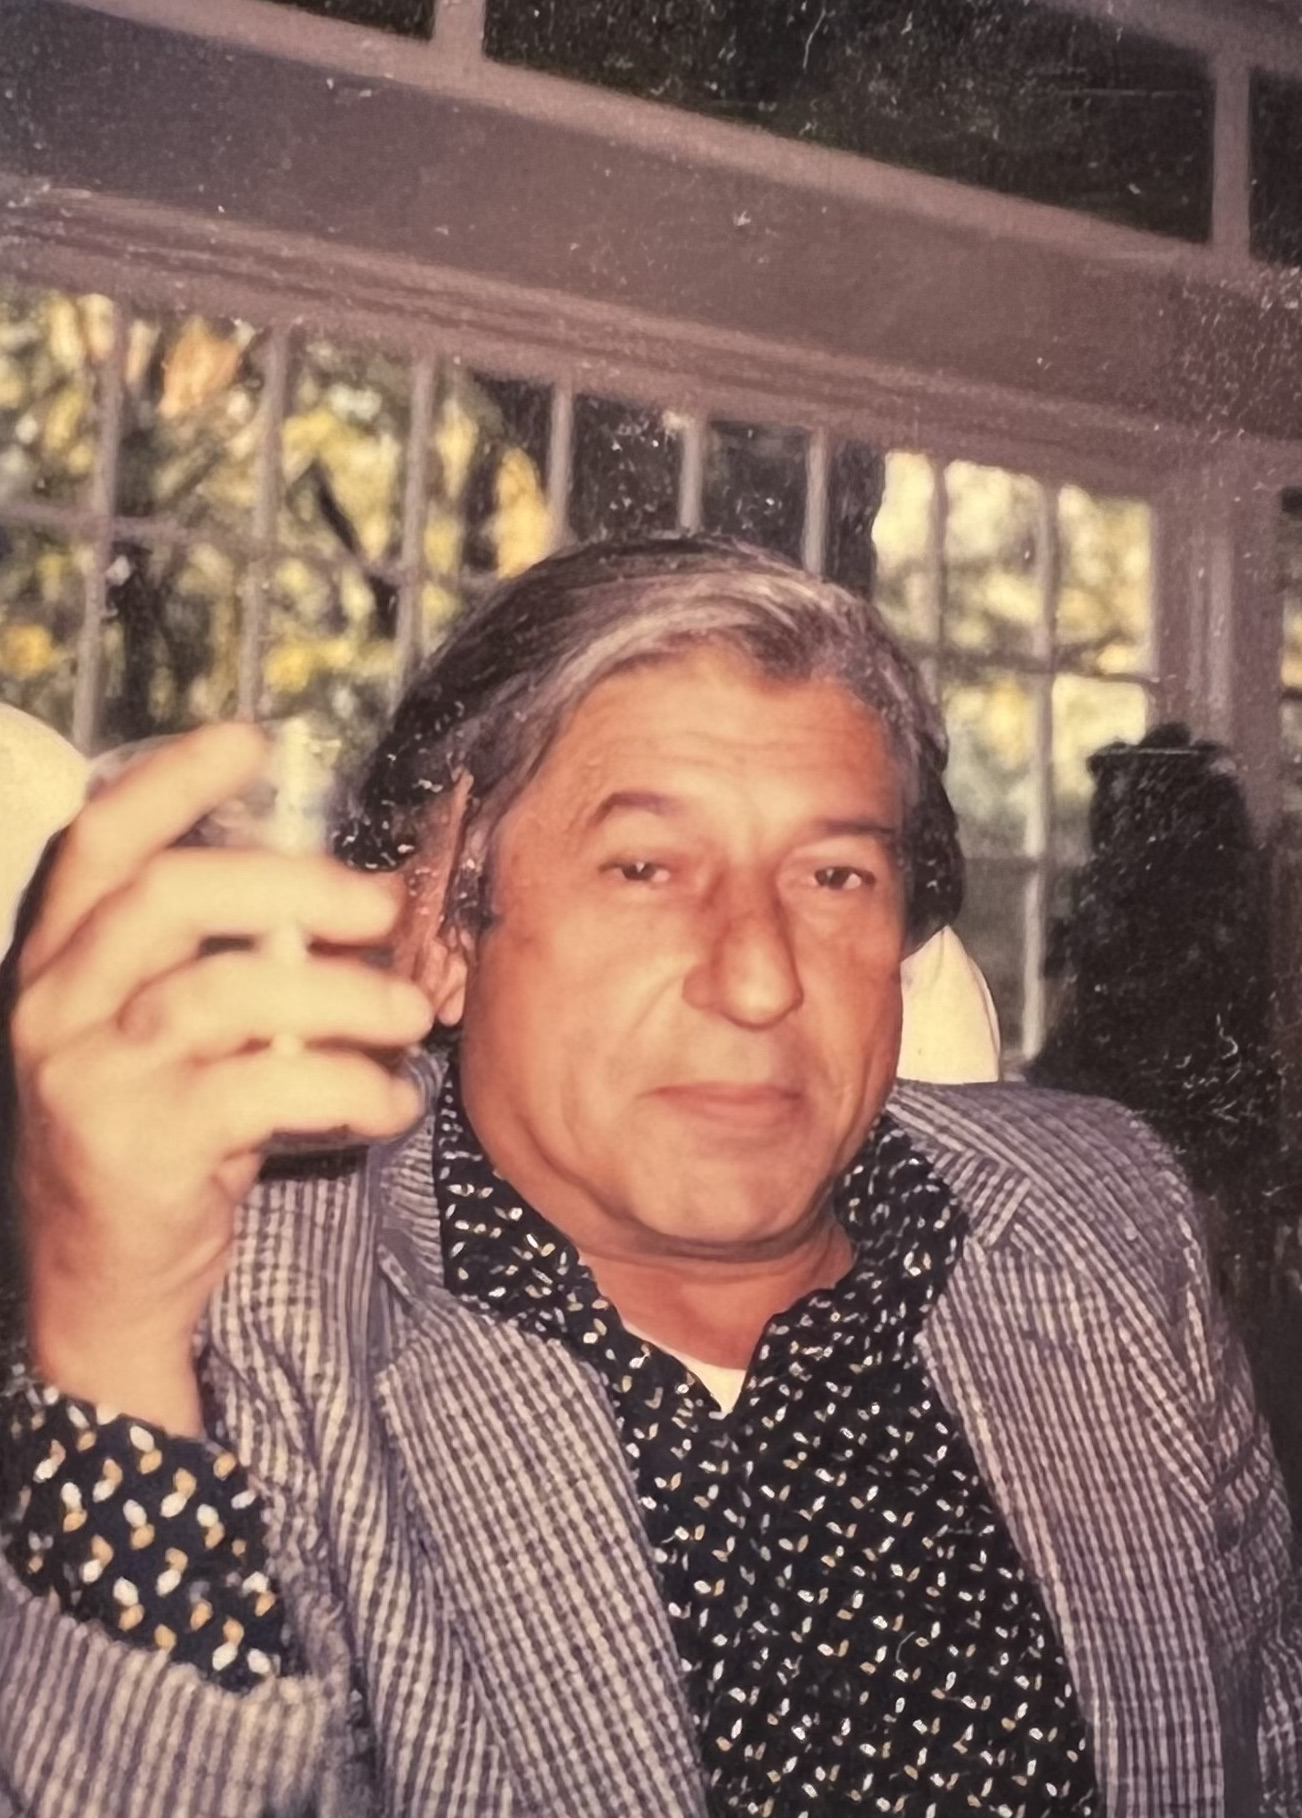 Photo of Walter Ferro holding a glass